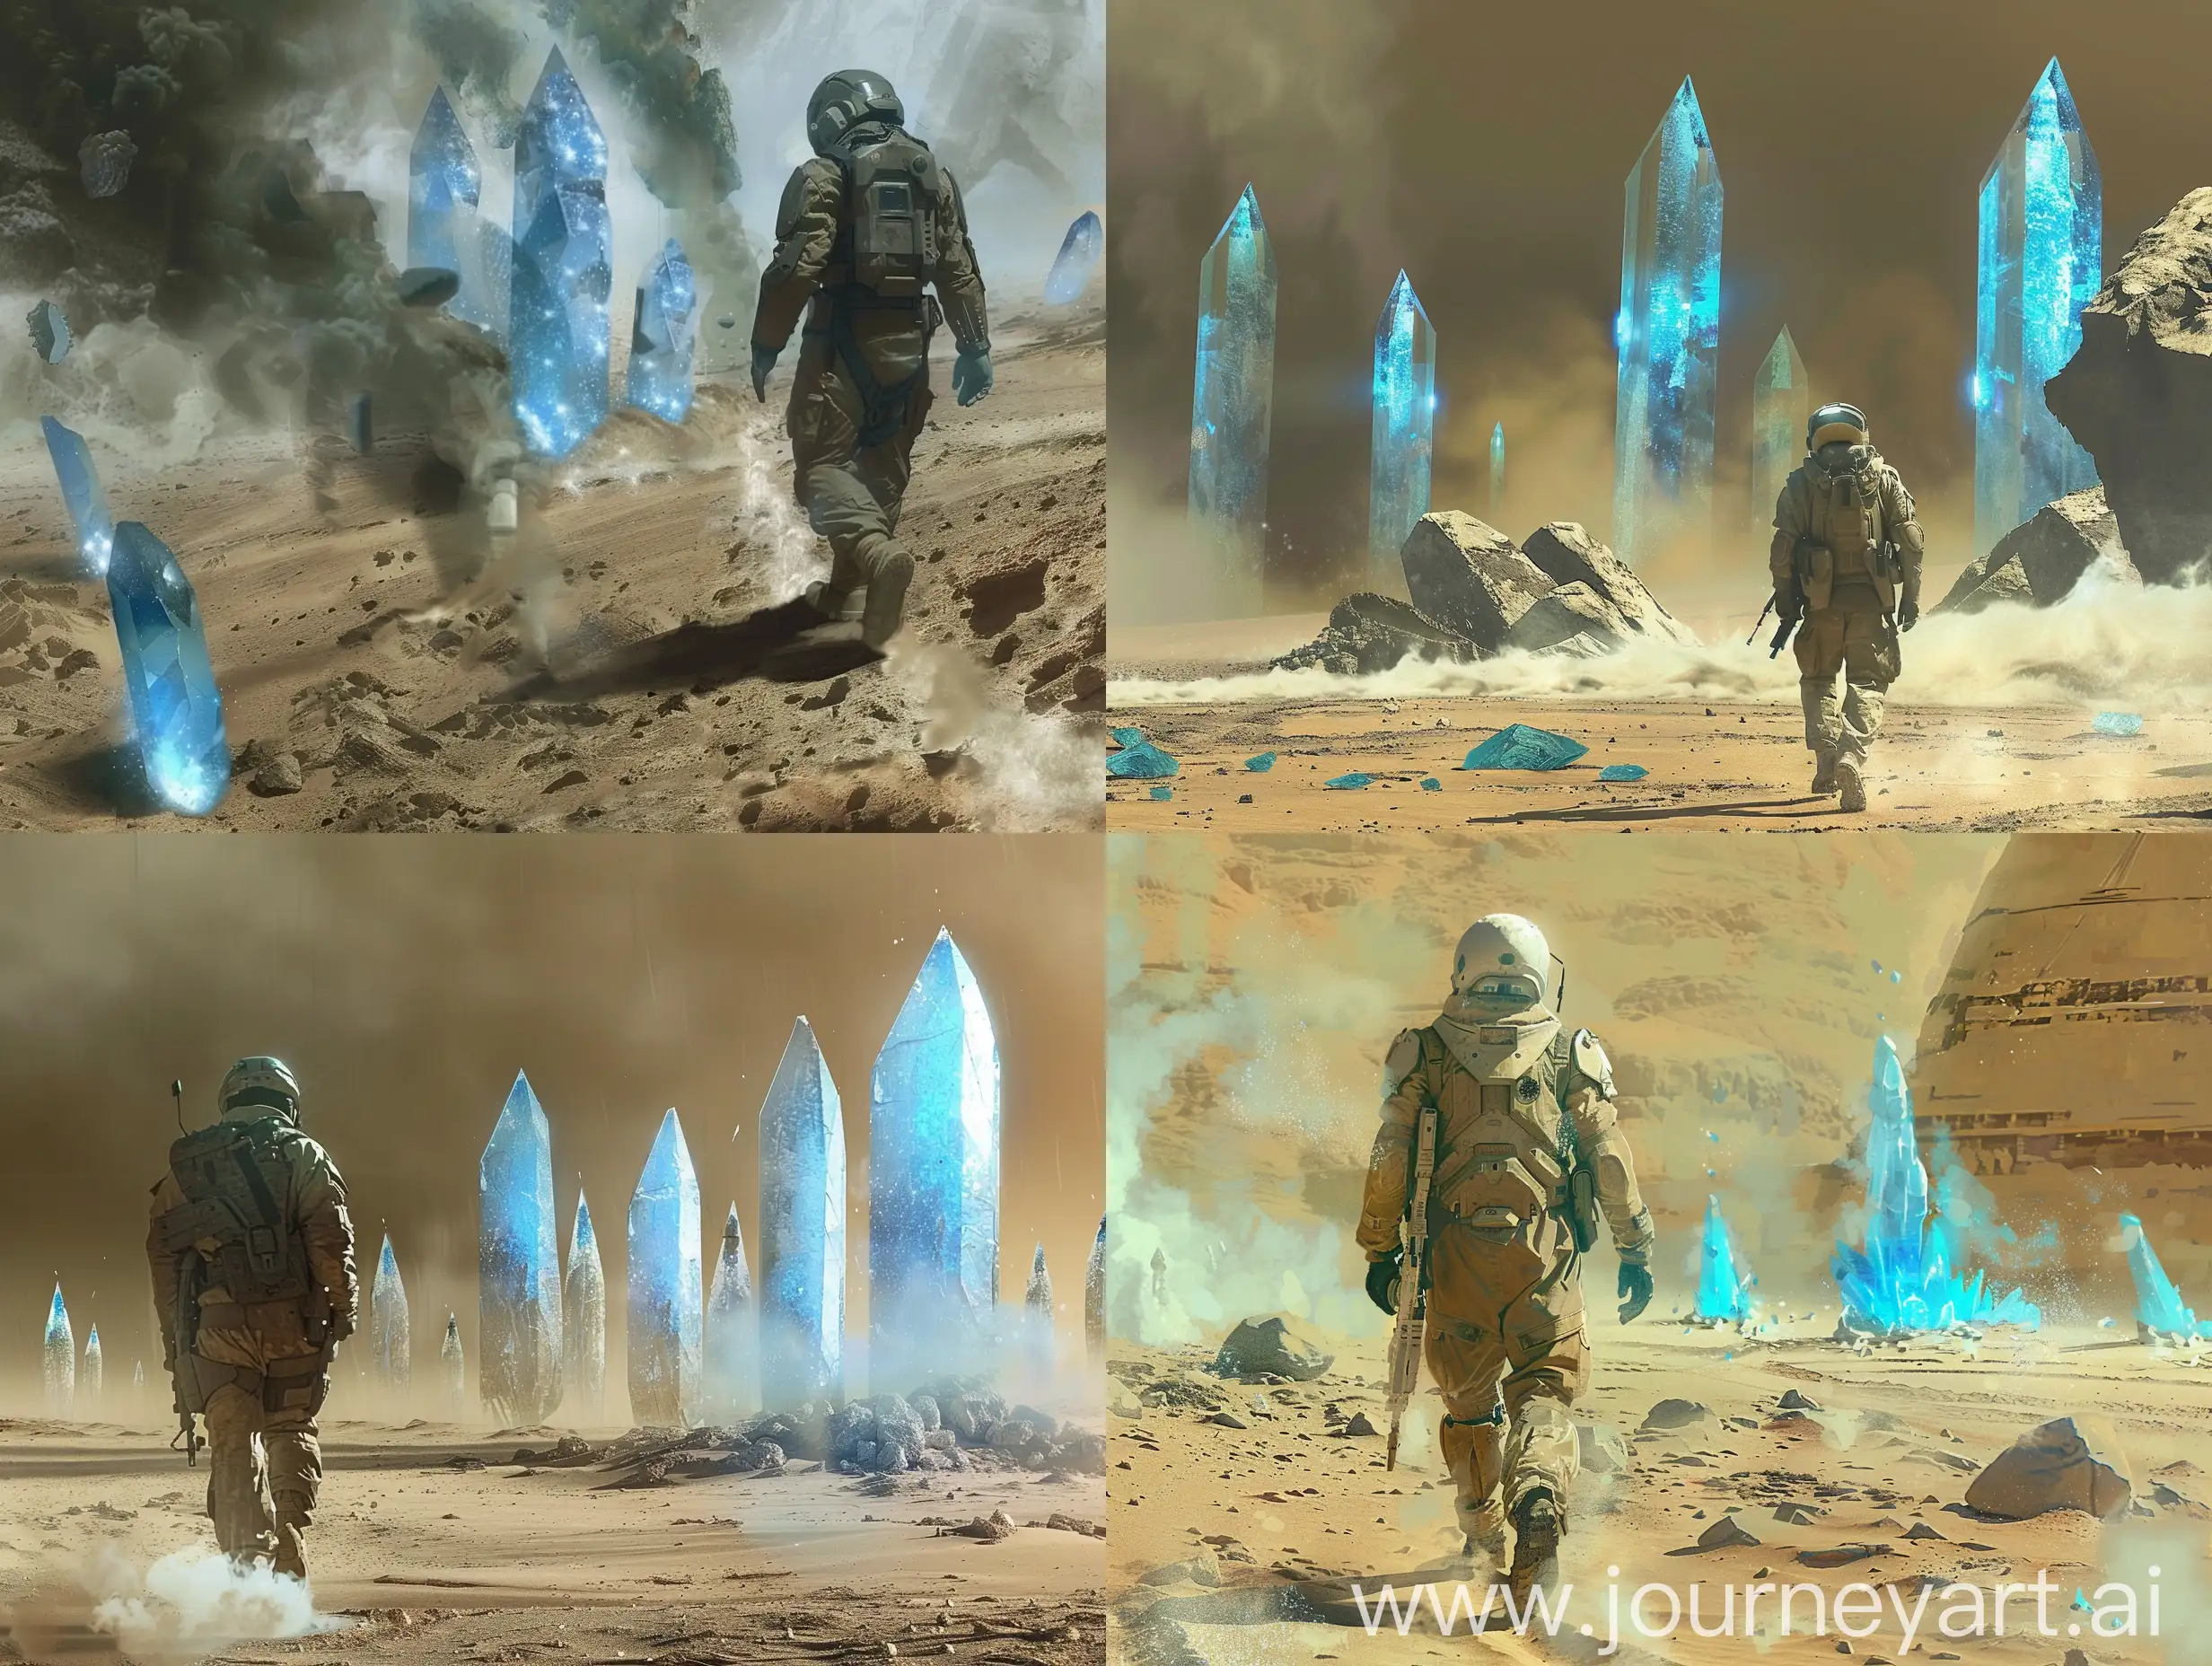 concept art, rock soil, vapor, blue crystals, perspective, garrison sci fi soldier walks